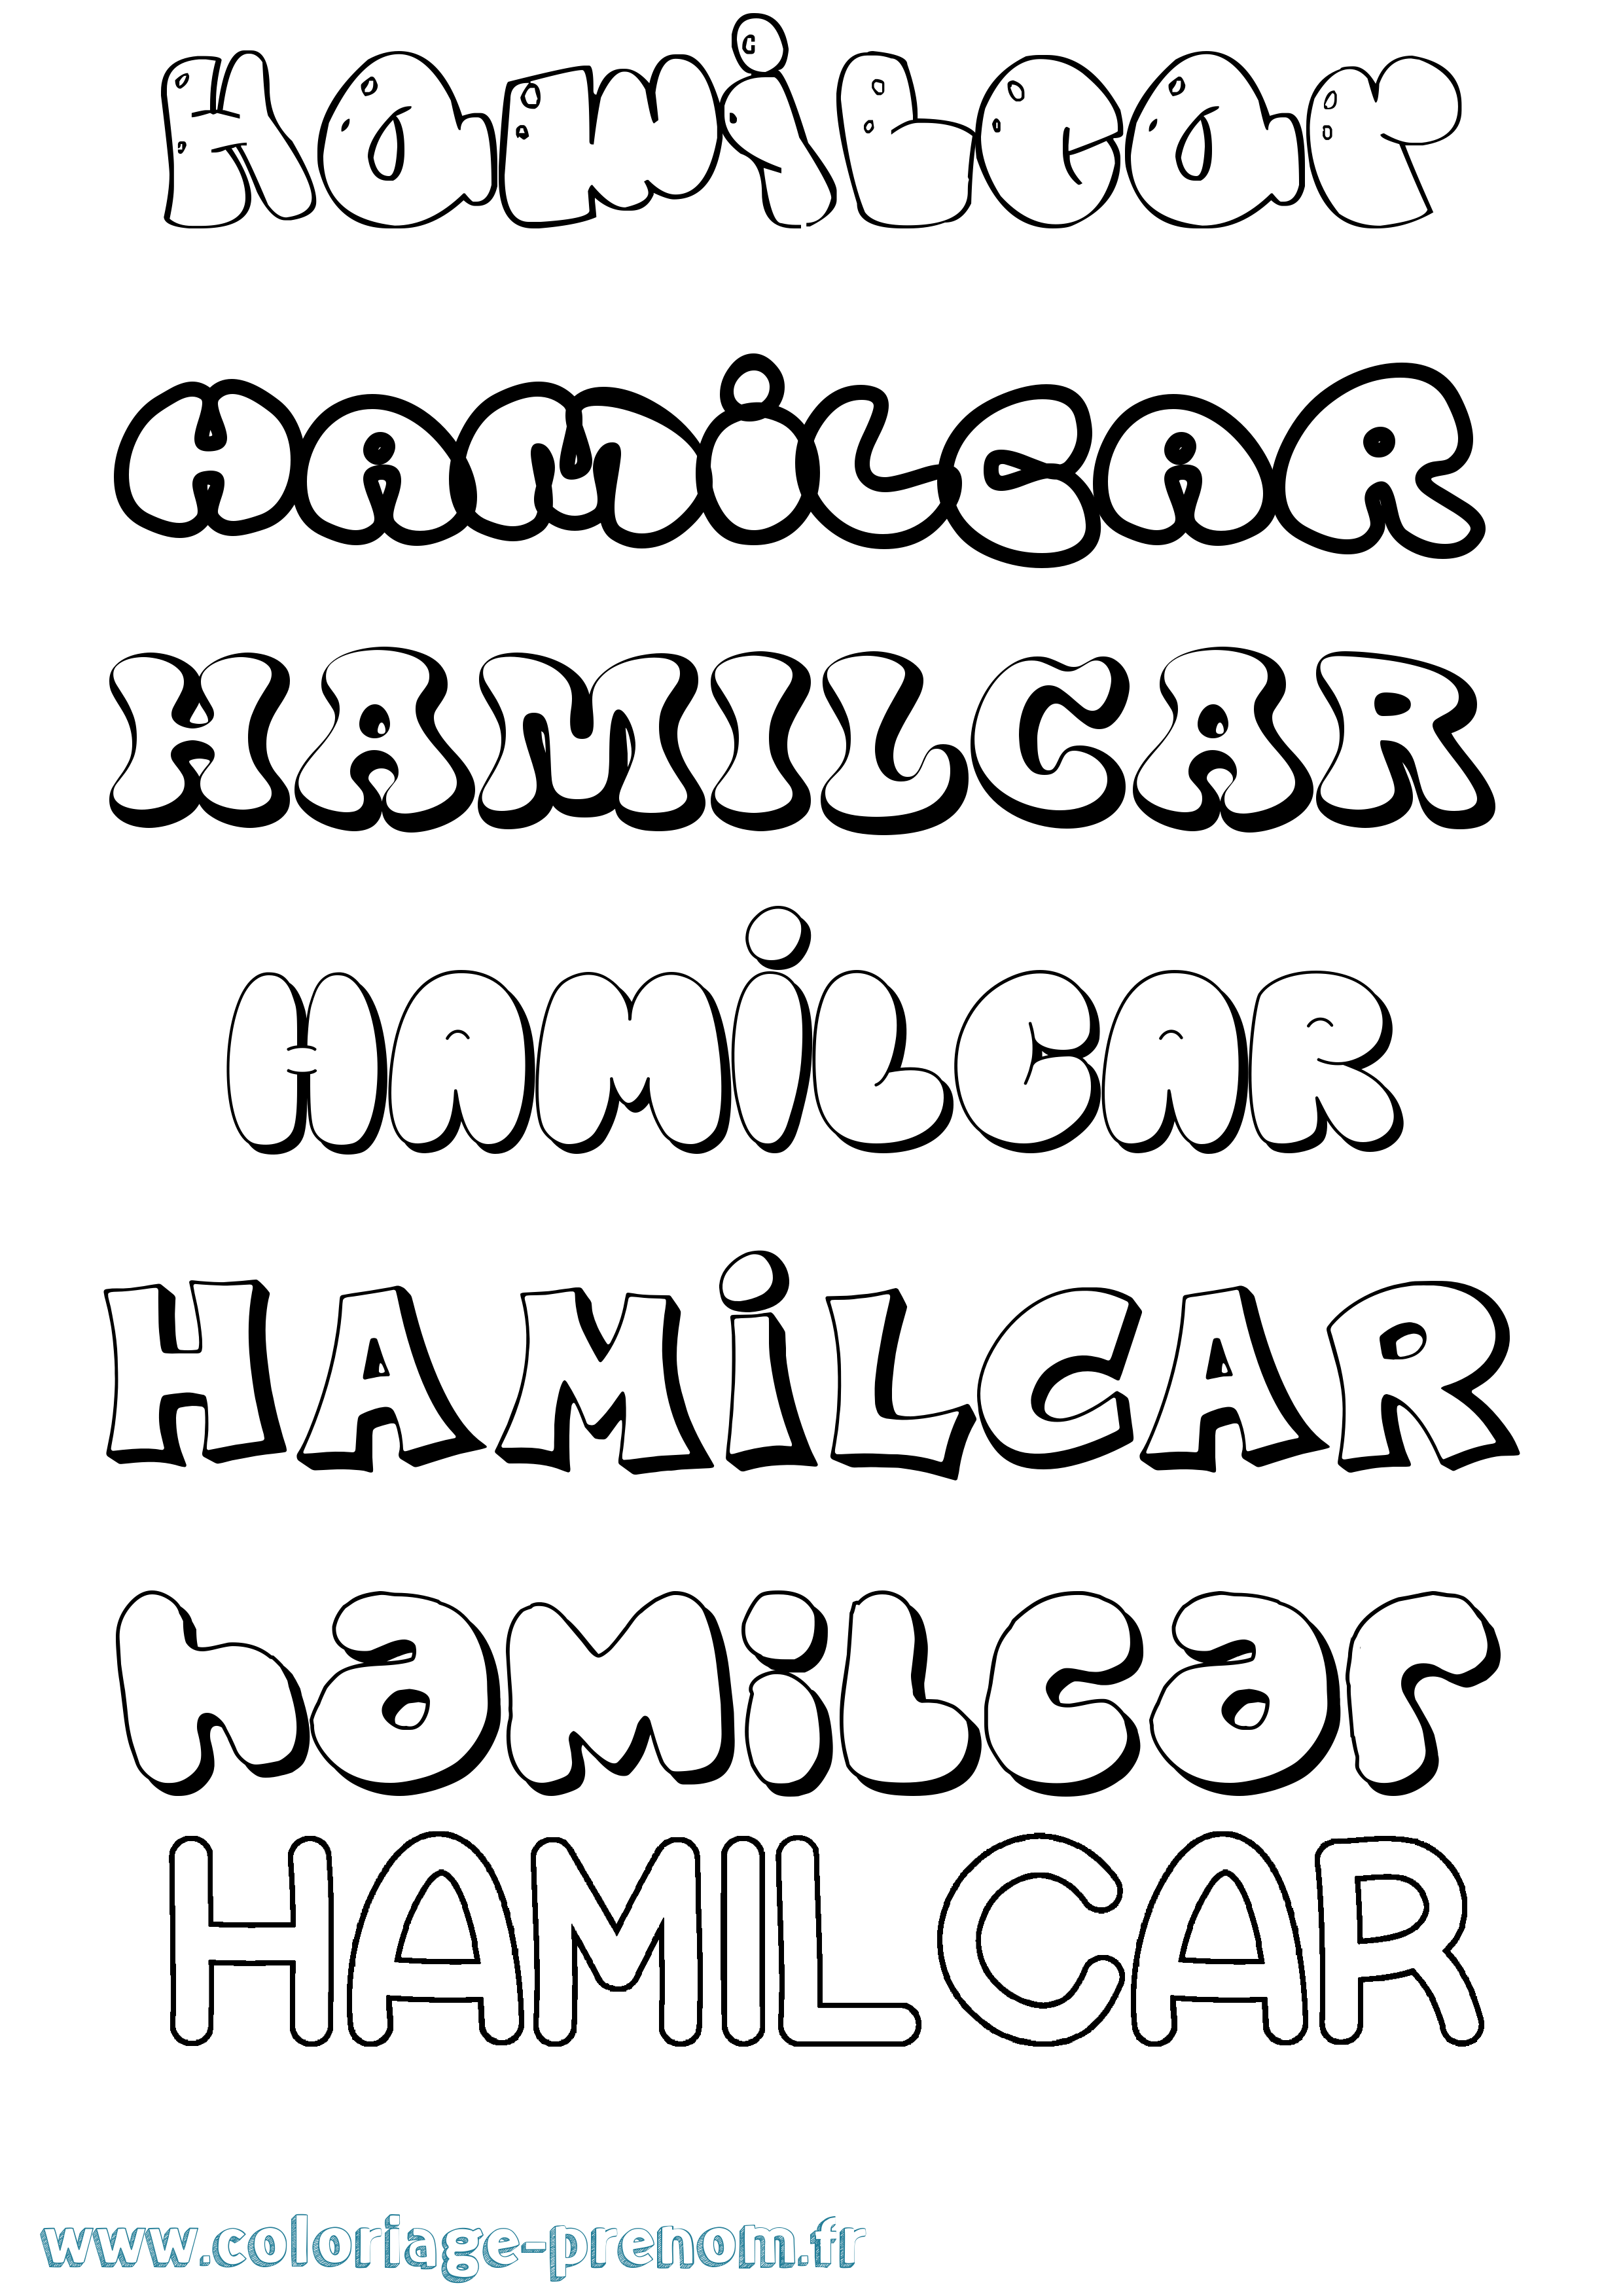 Coloriage prénom Hamilcar Bubble